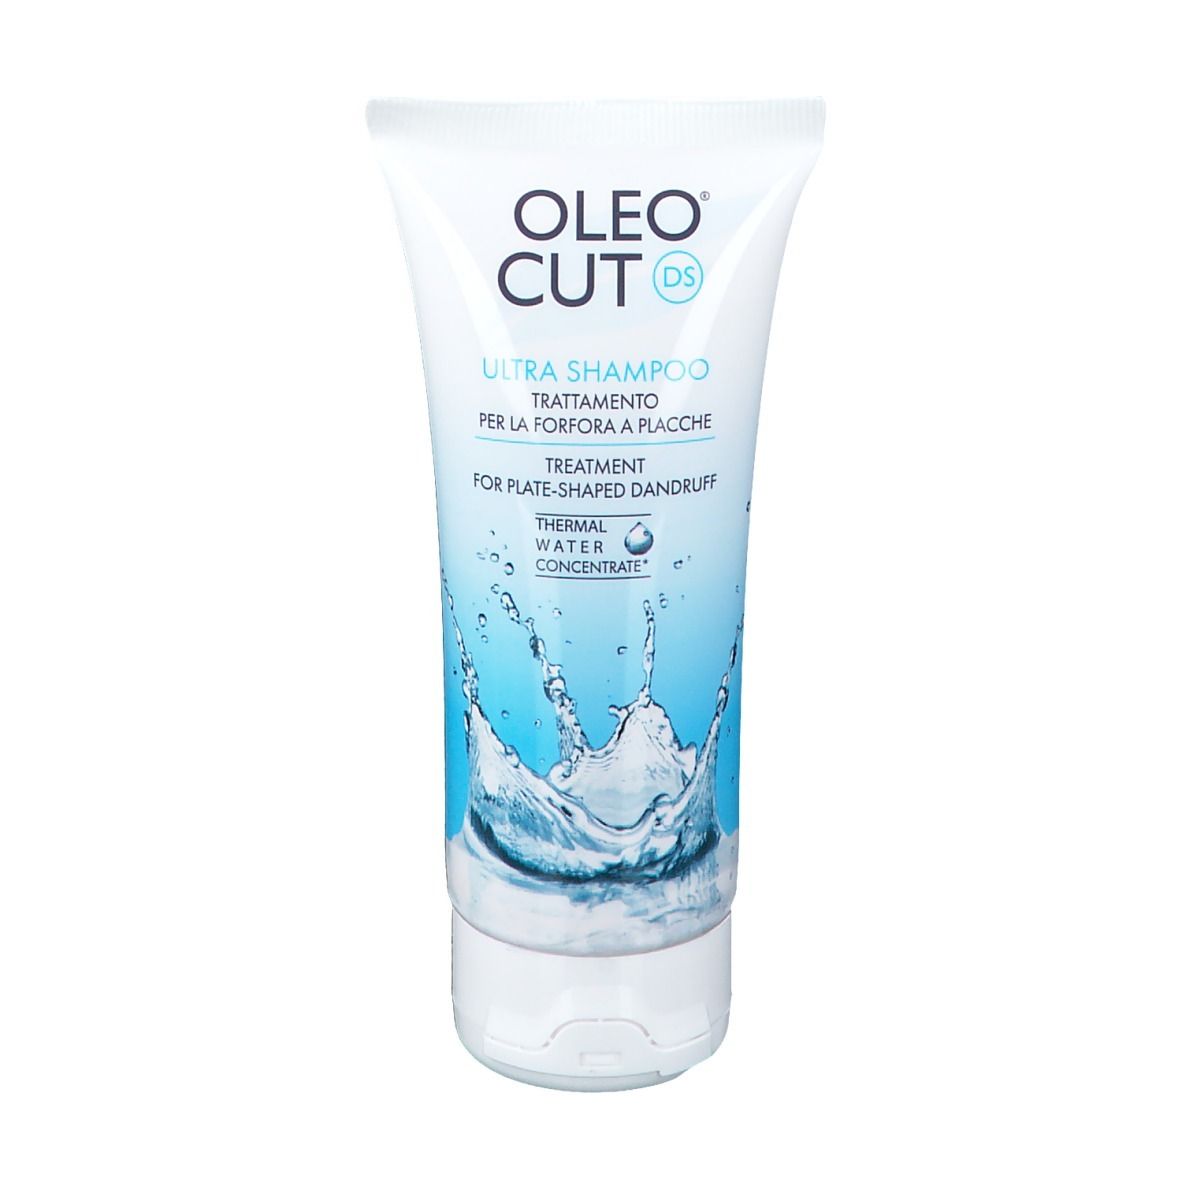 Image of OLEO® CUT Ds Ultra Shampoo